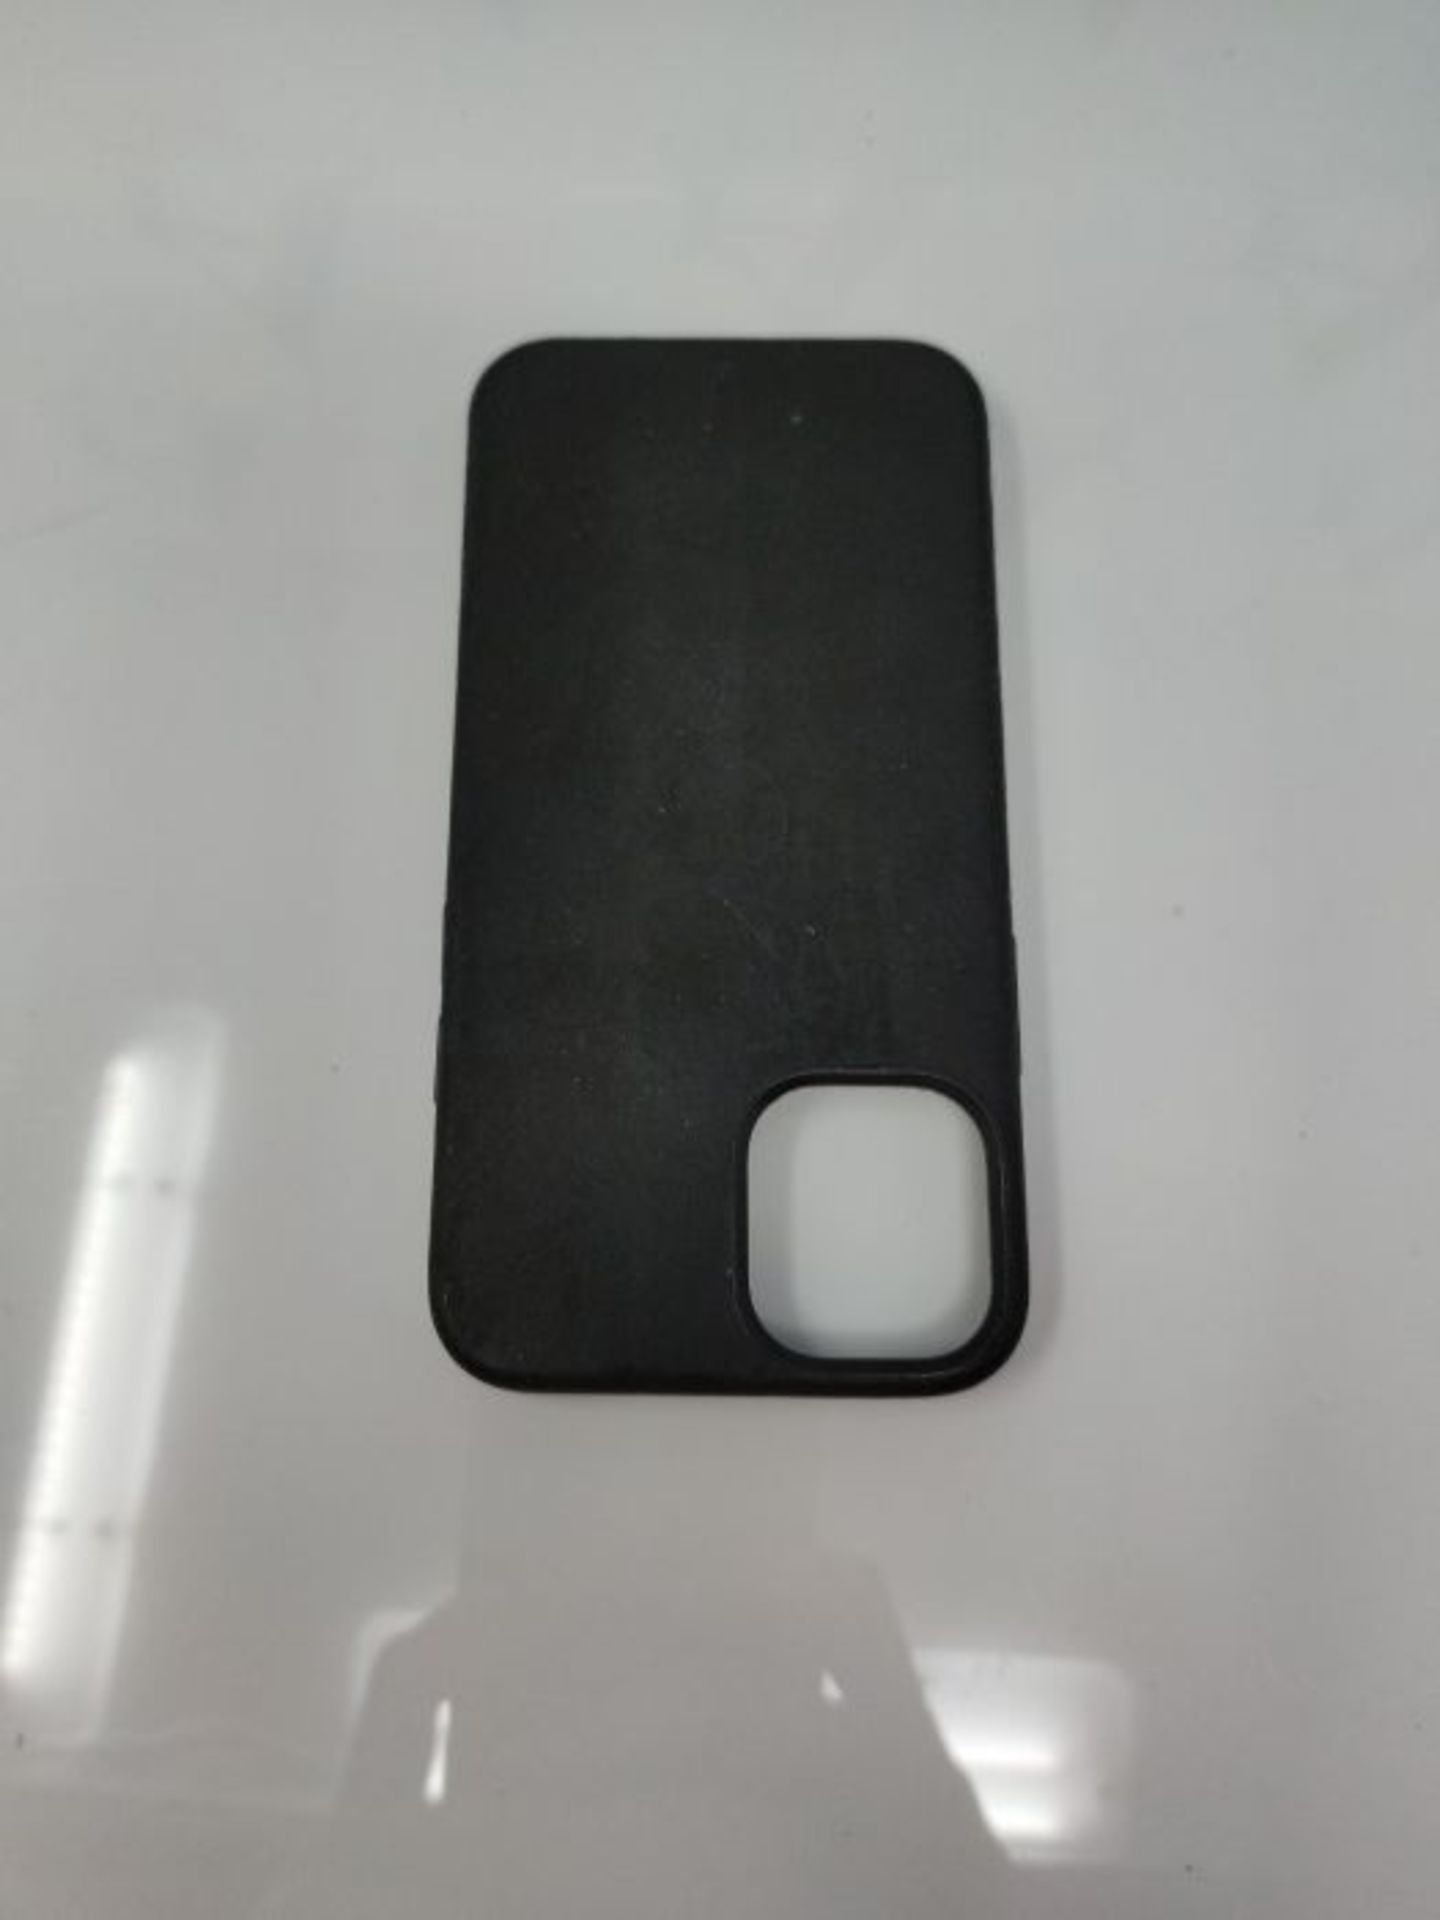 Apple Leder Case mit MagSafe (fÃ¼r iPhone 12 Mini) - Schwarz - 5.4 Zoll - Image 2 of 2